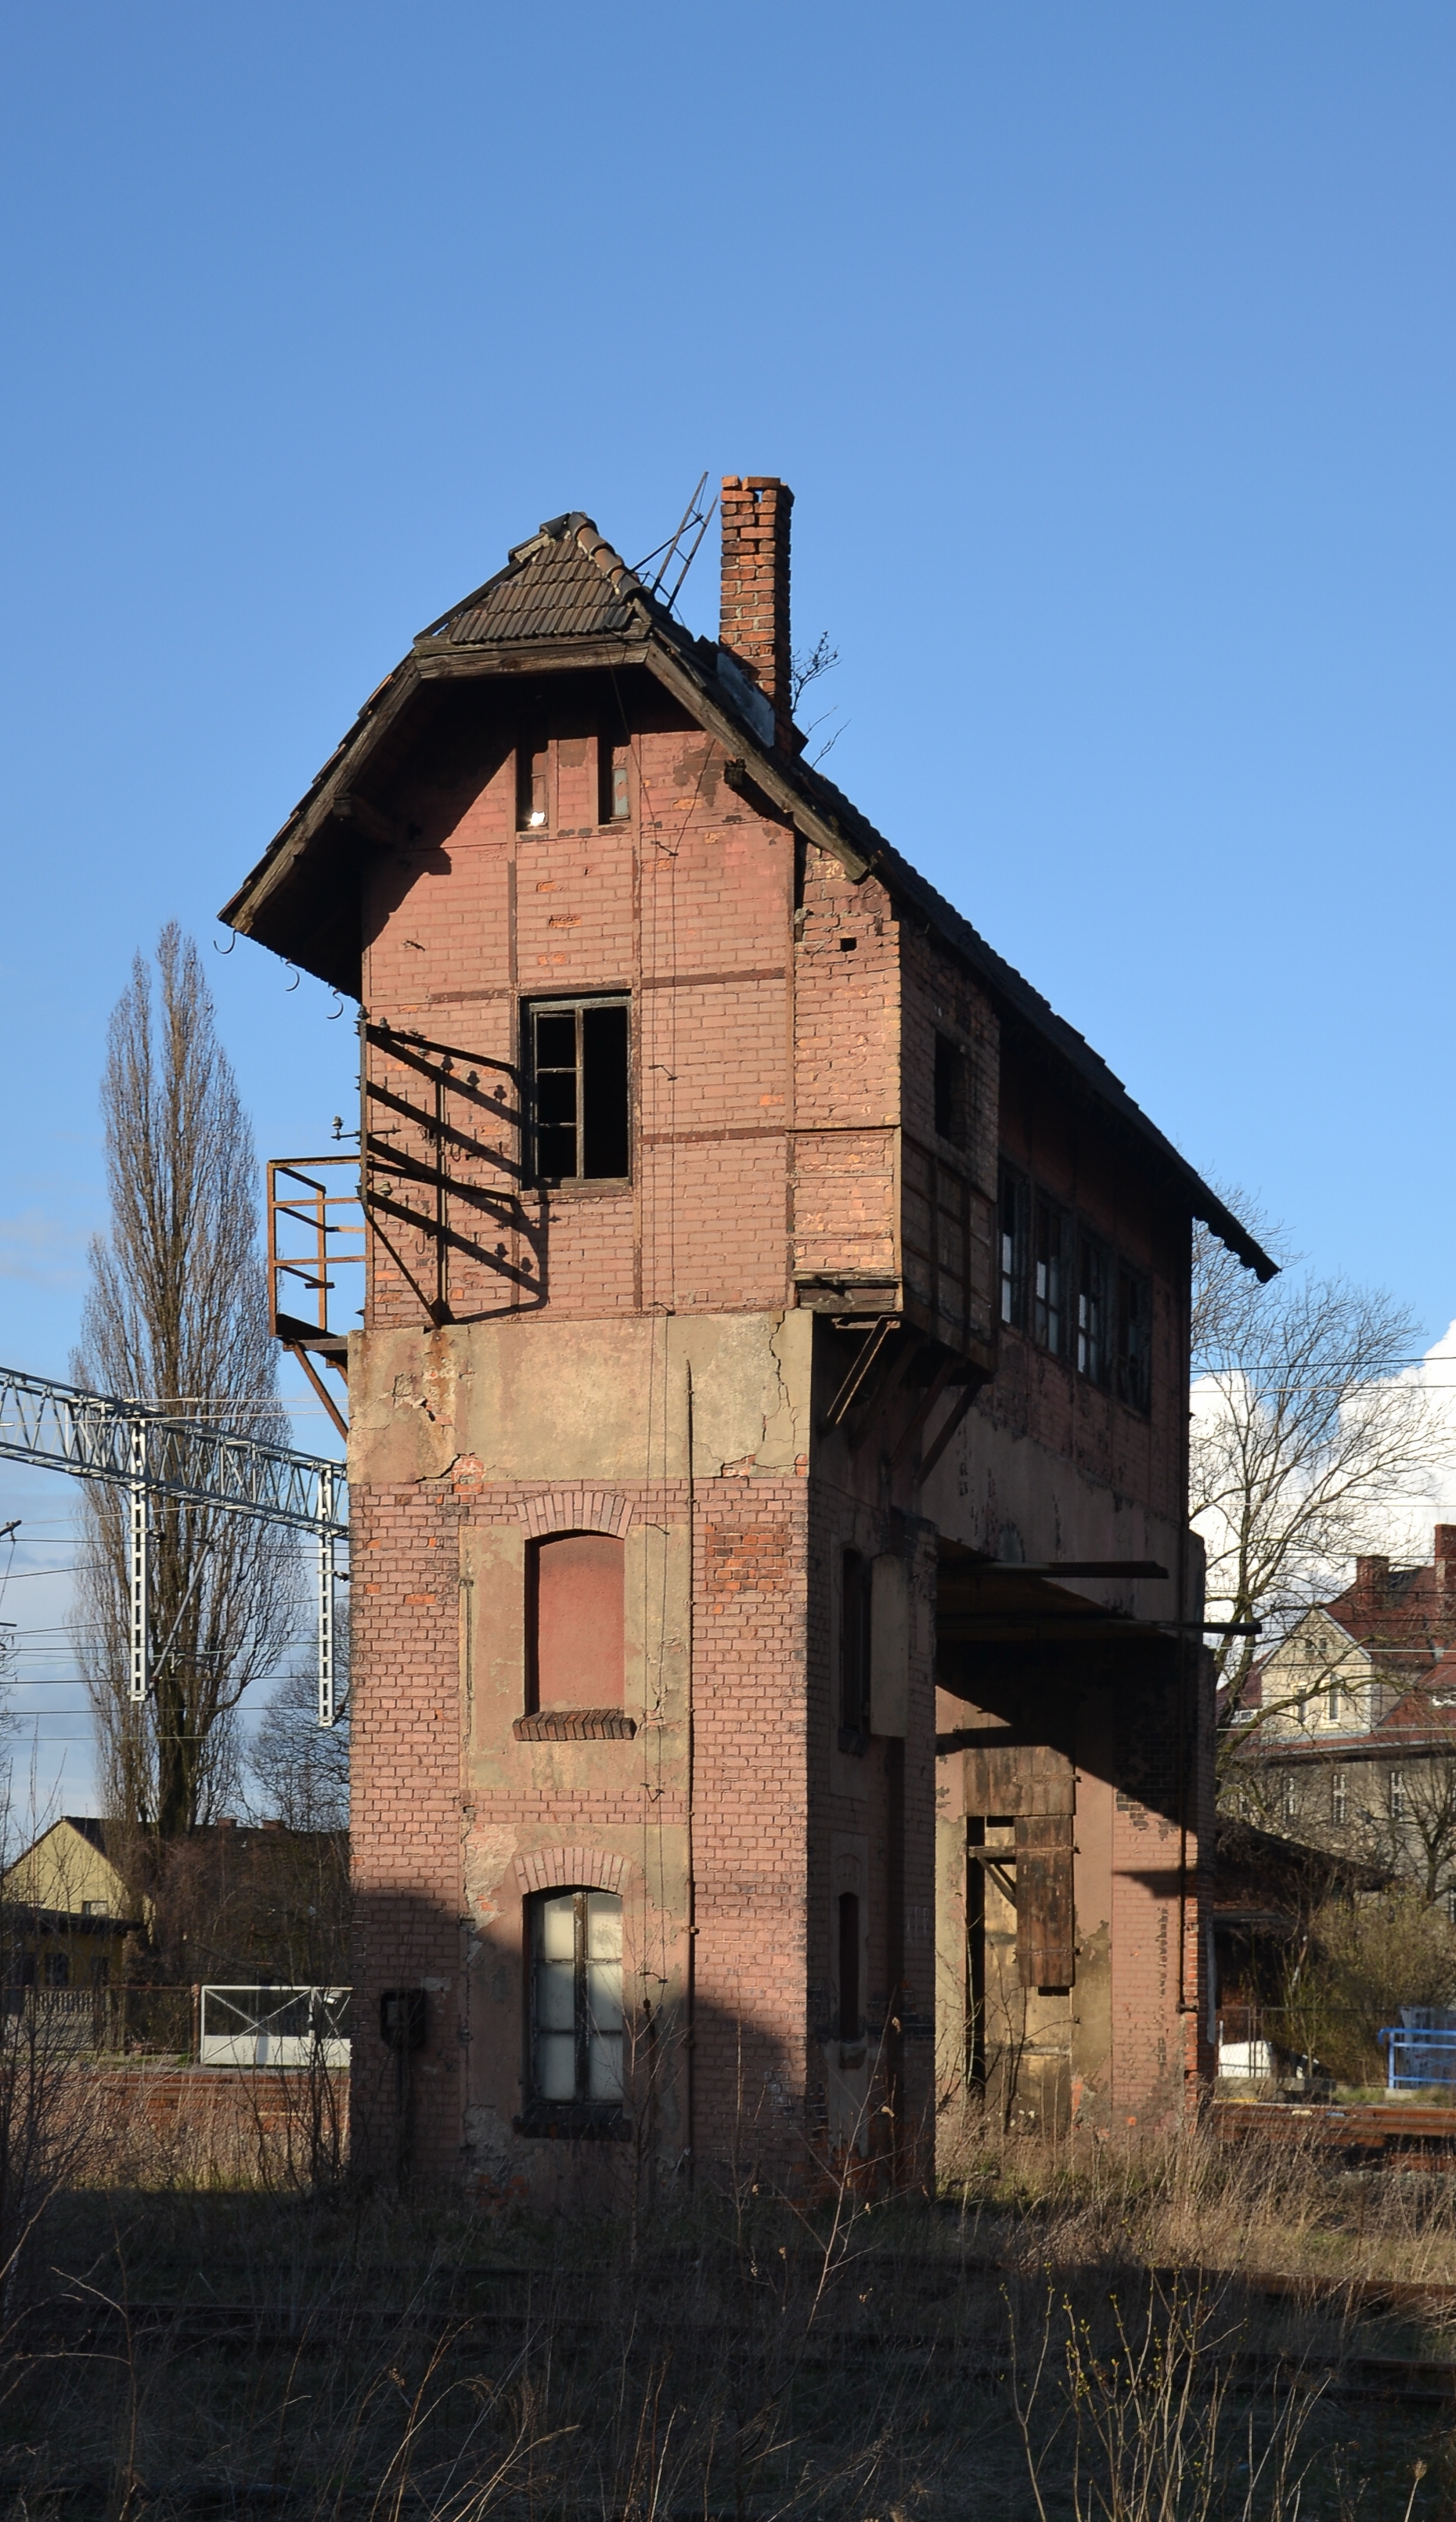 Pyskowice (Peiskretscham) - old signal box